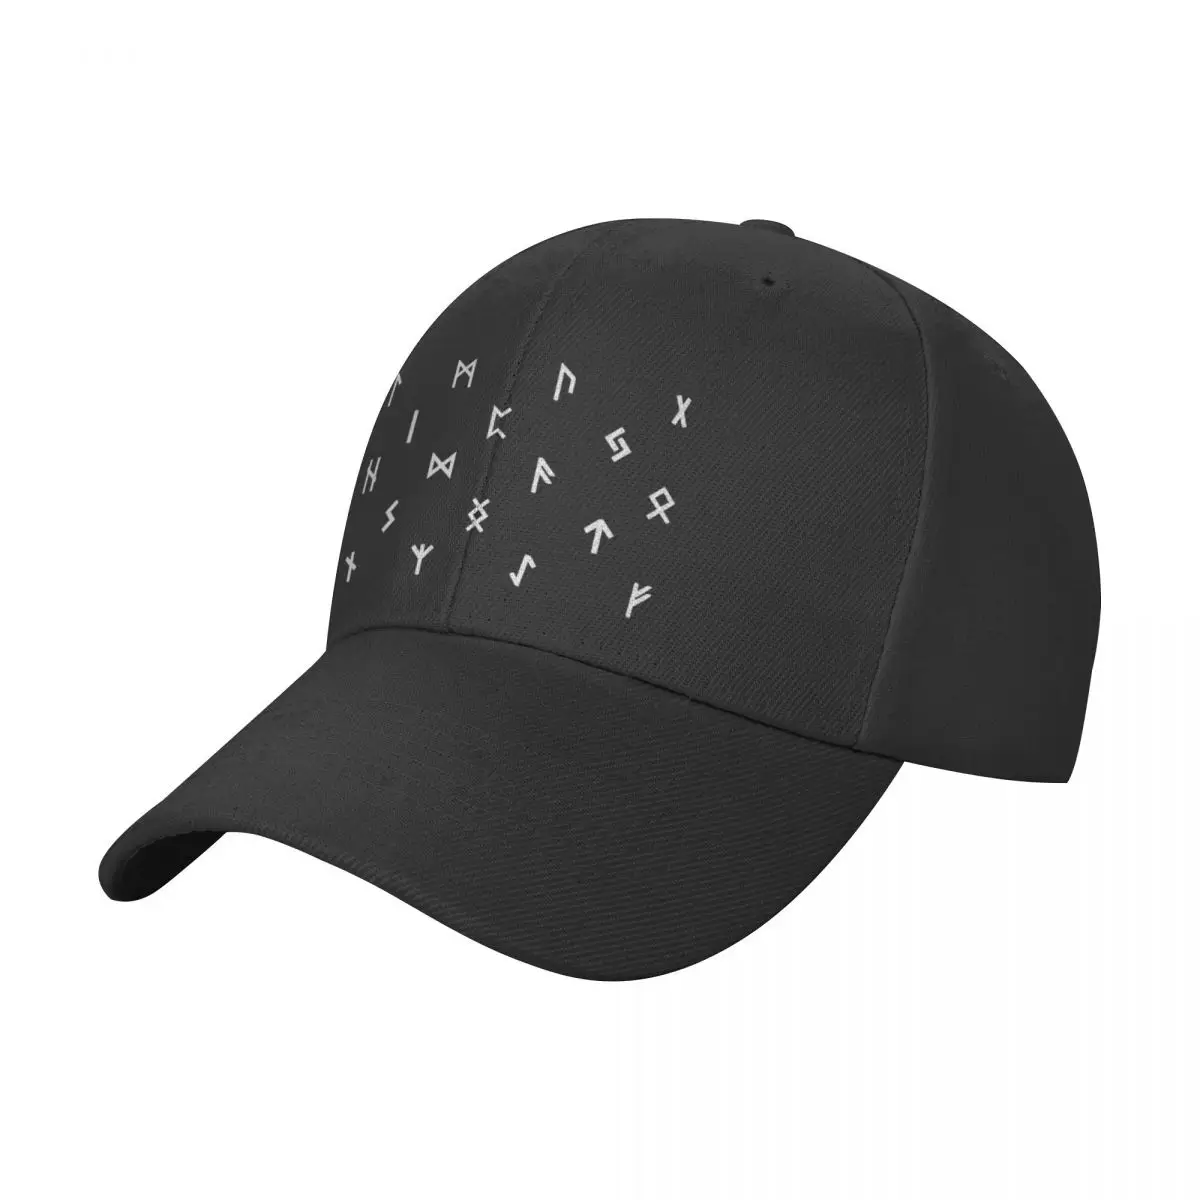 

Futhark Rune Symbols Alphabet And Parttern Baseball Cap Trucker Cap Fashion Beach New In The Hat For Man Women's